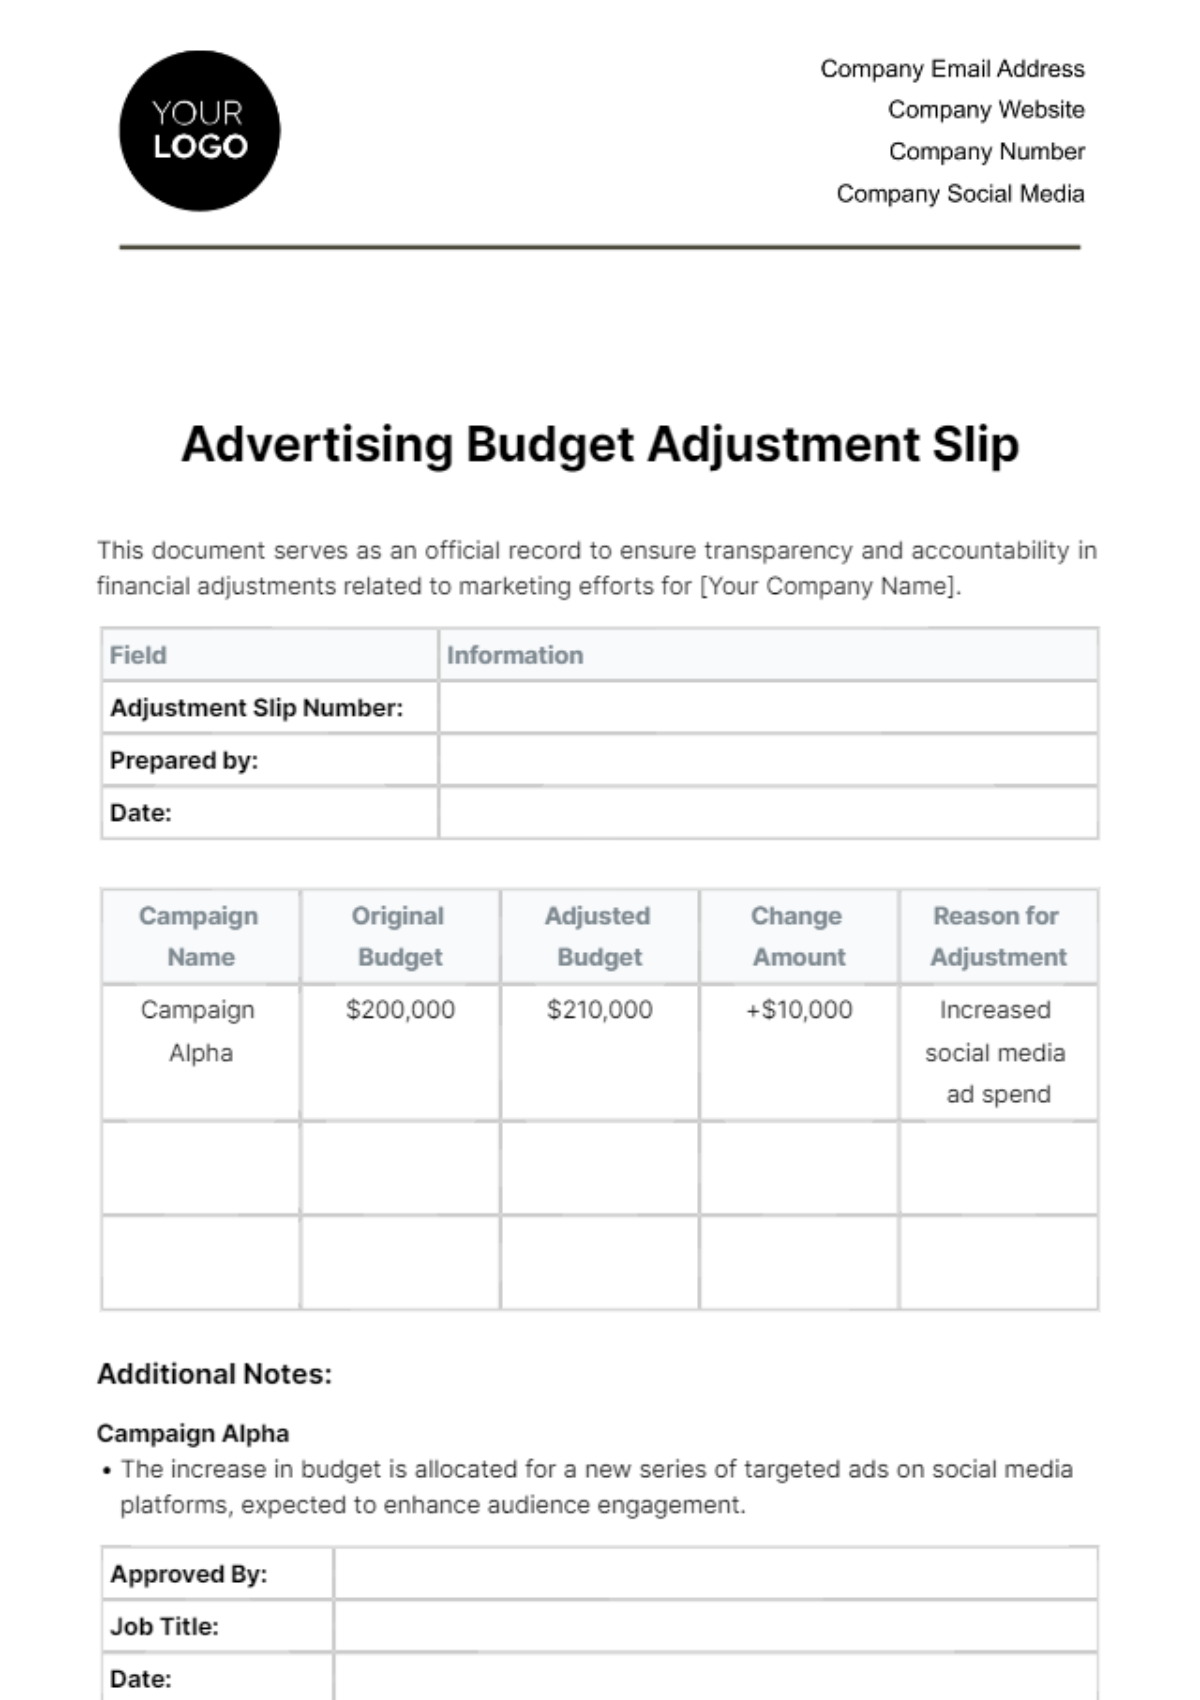 Advertising Budget Adjustment Slip Template